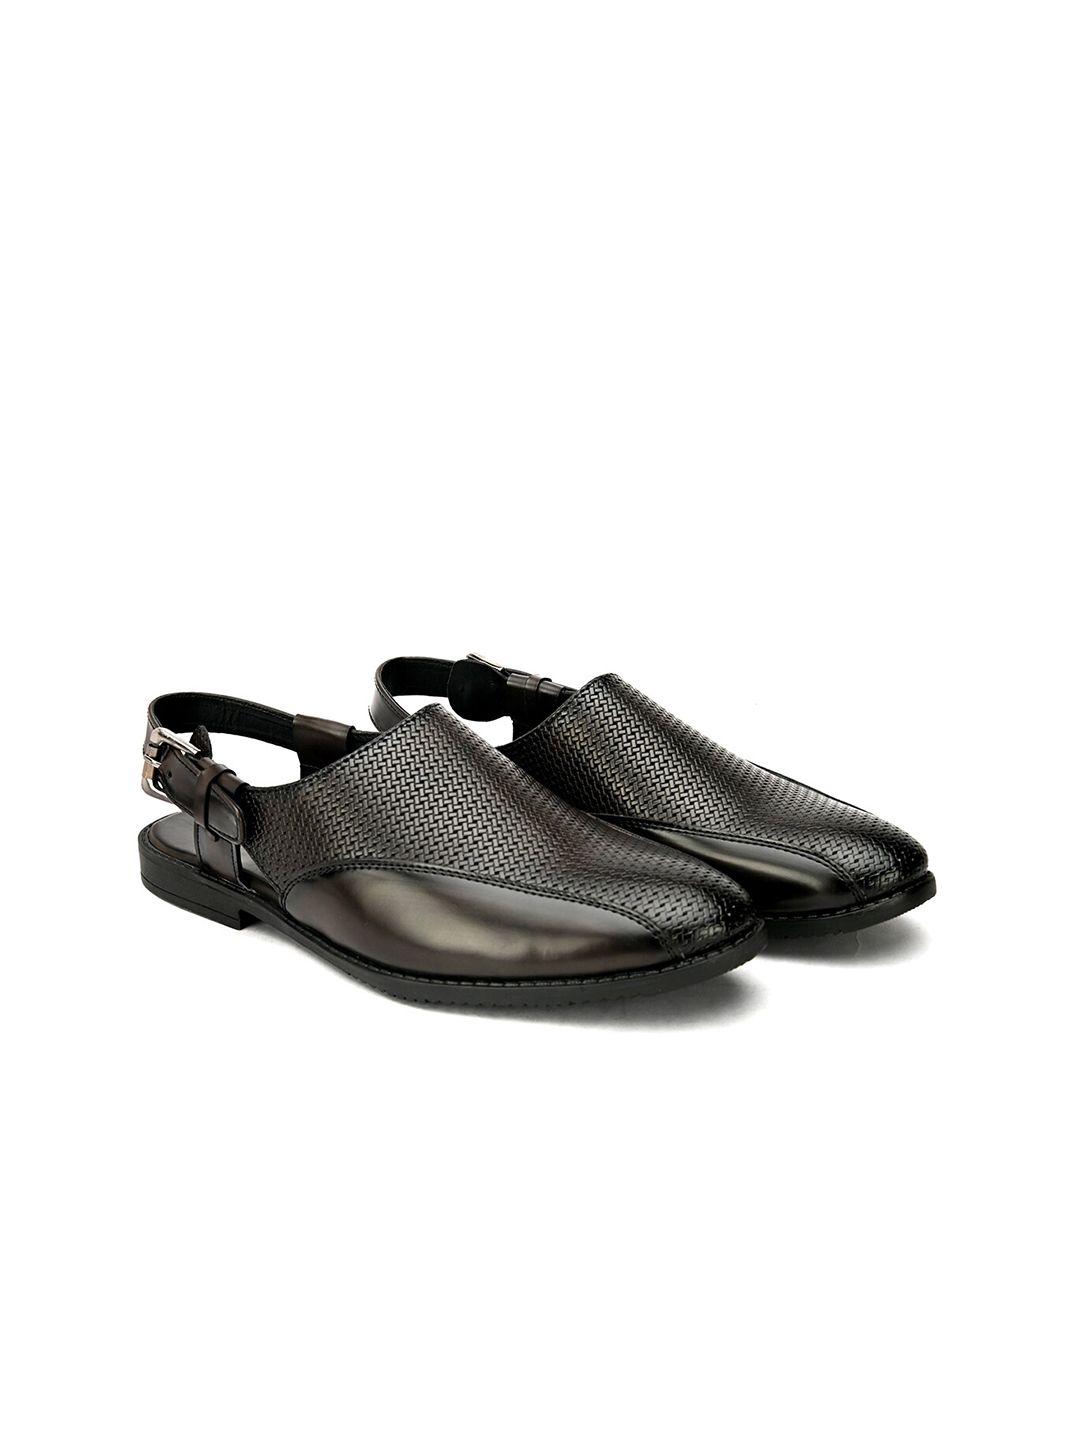 fentacia-men-black-shoe-style-sandals